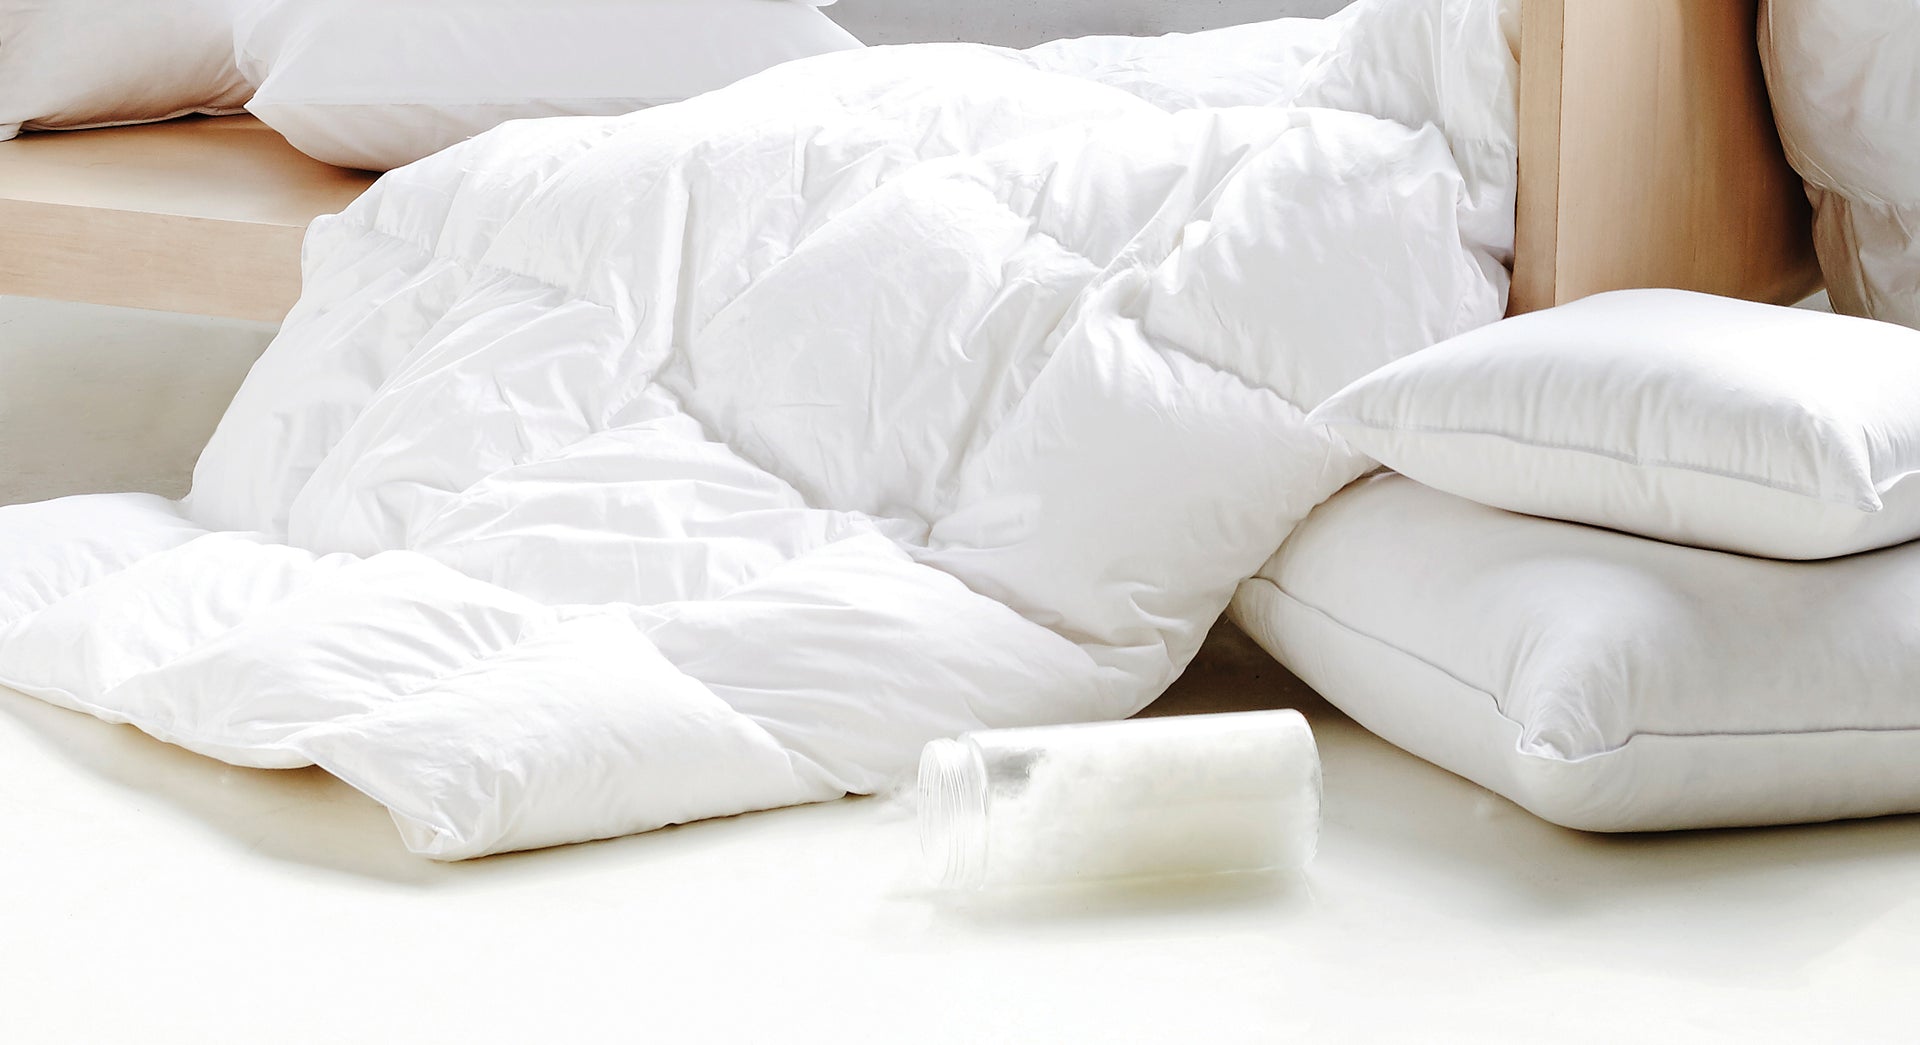 Is a Cotton Pillow Better than a Down Pillow? A Cotton-Filled